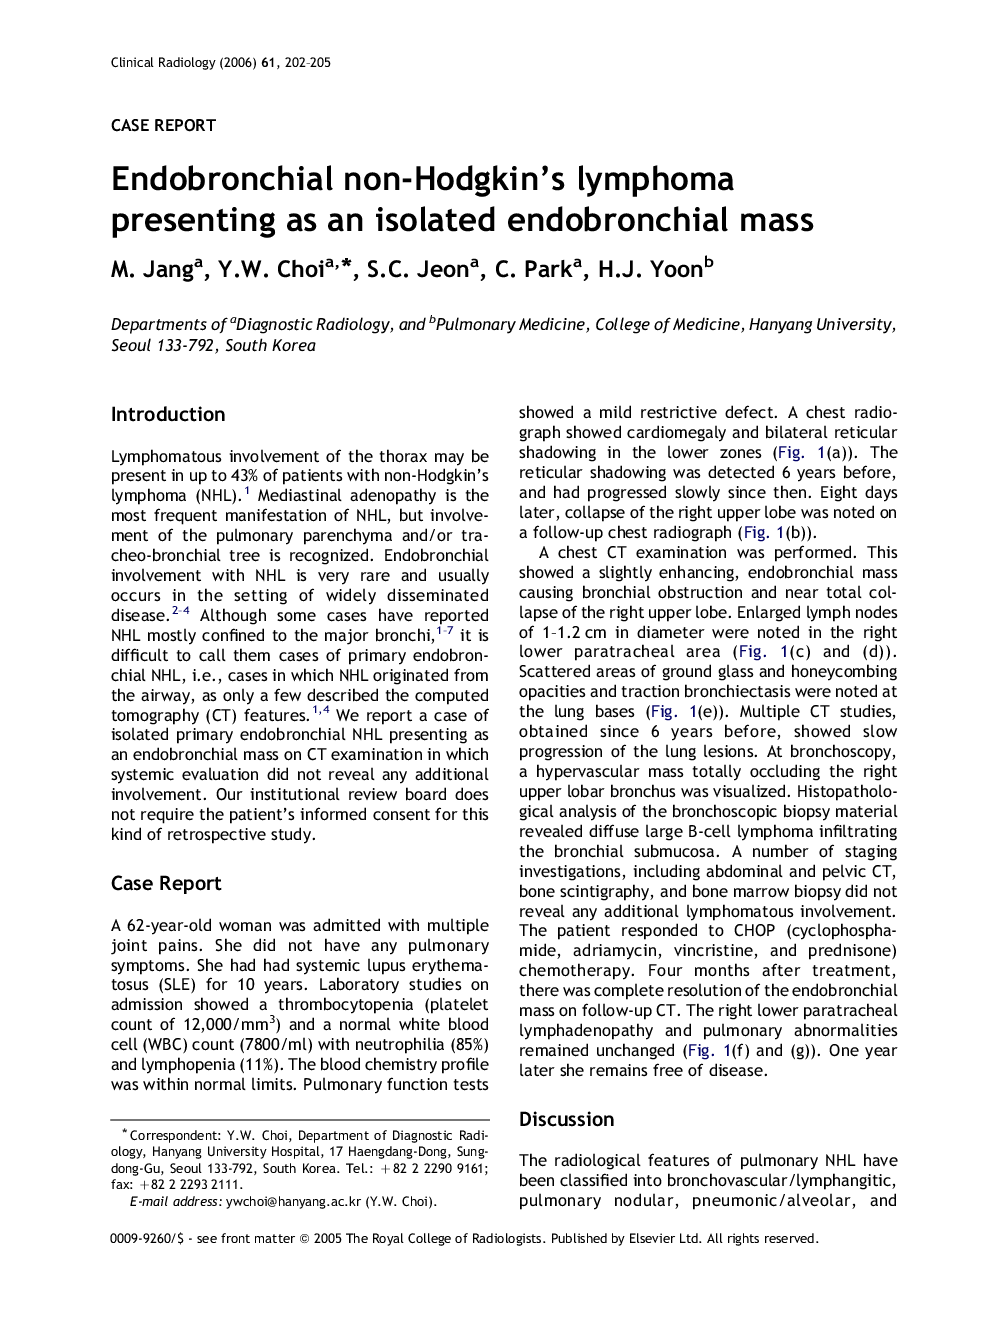 Endobronchial non-Hodgkin's lymphoma presenting as an isolated endobronchial mass